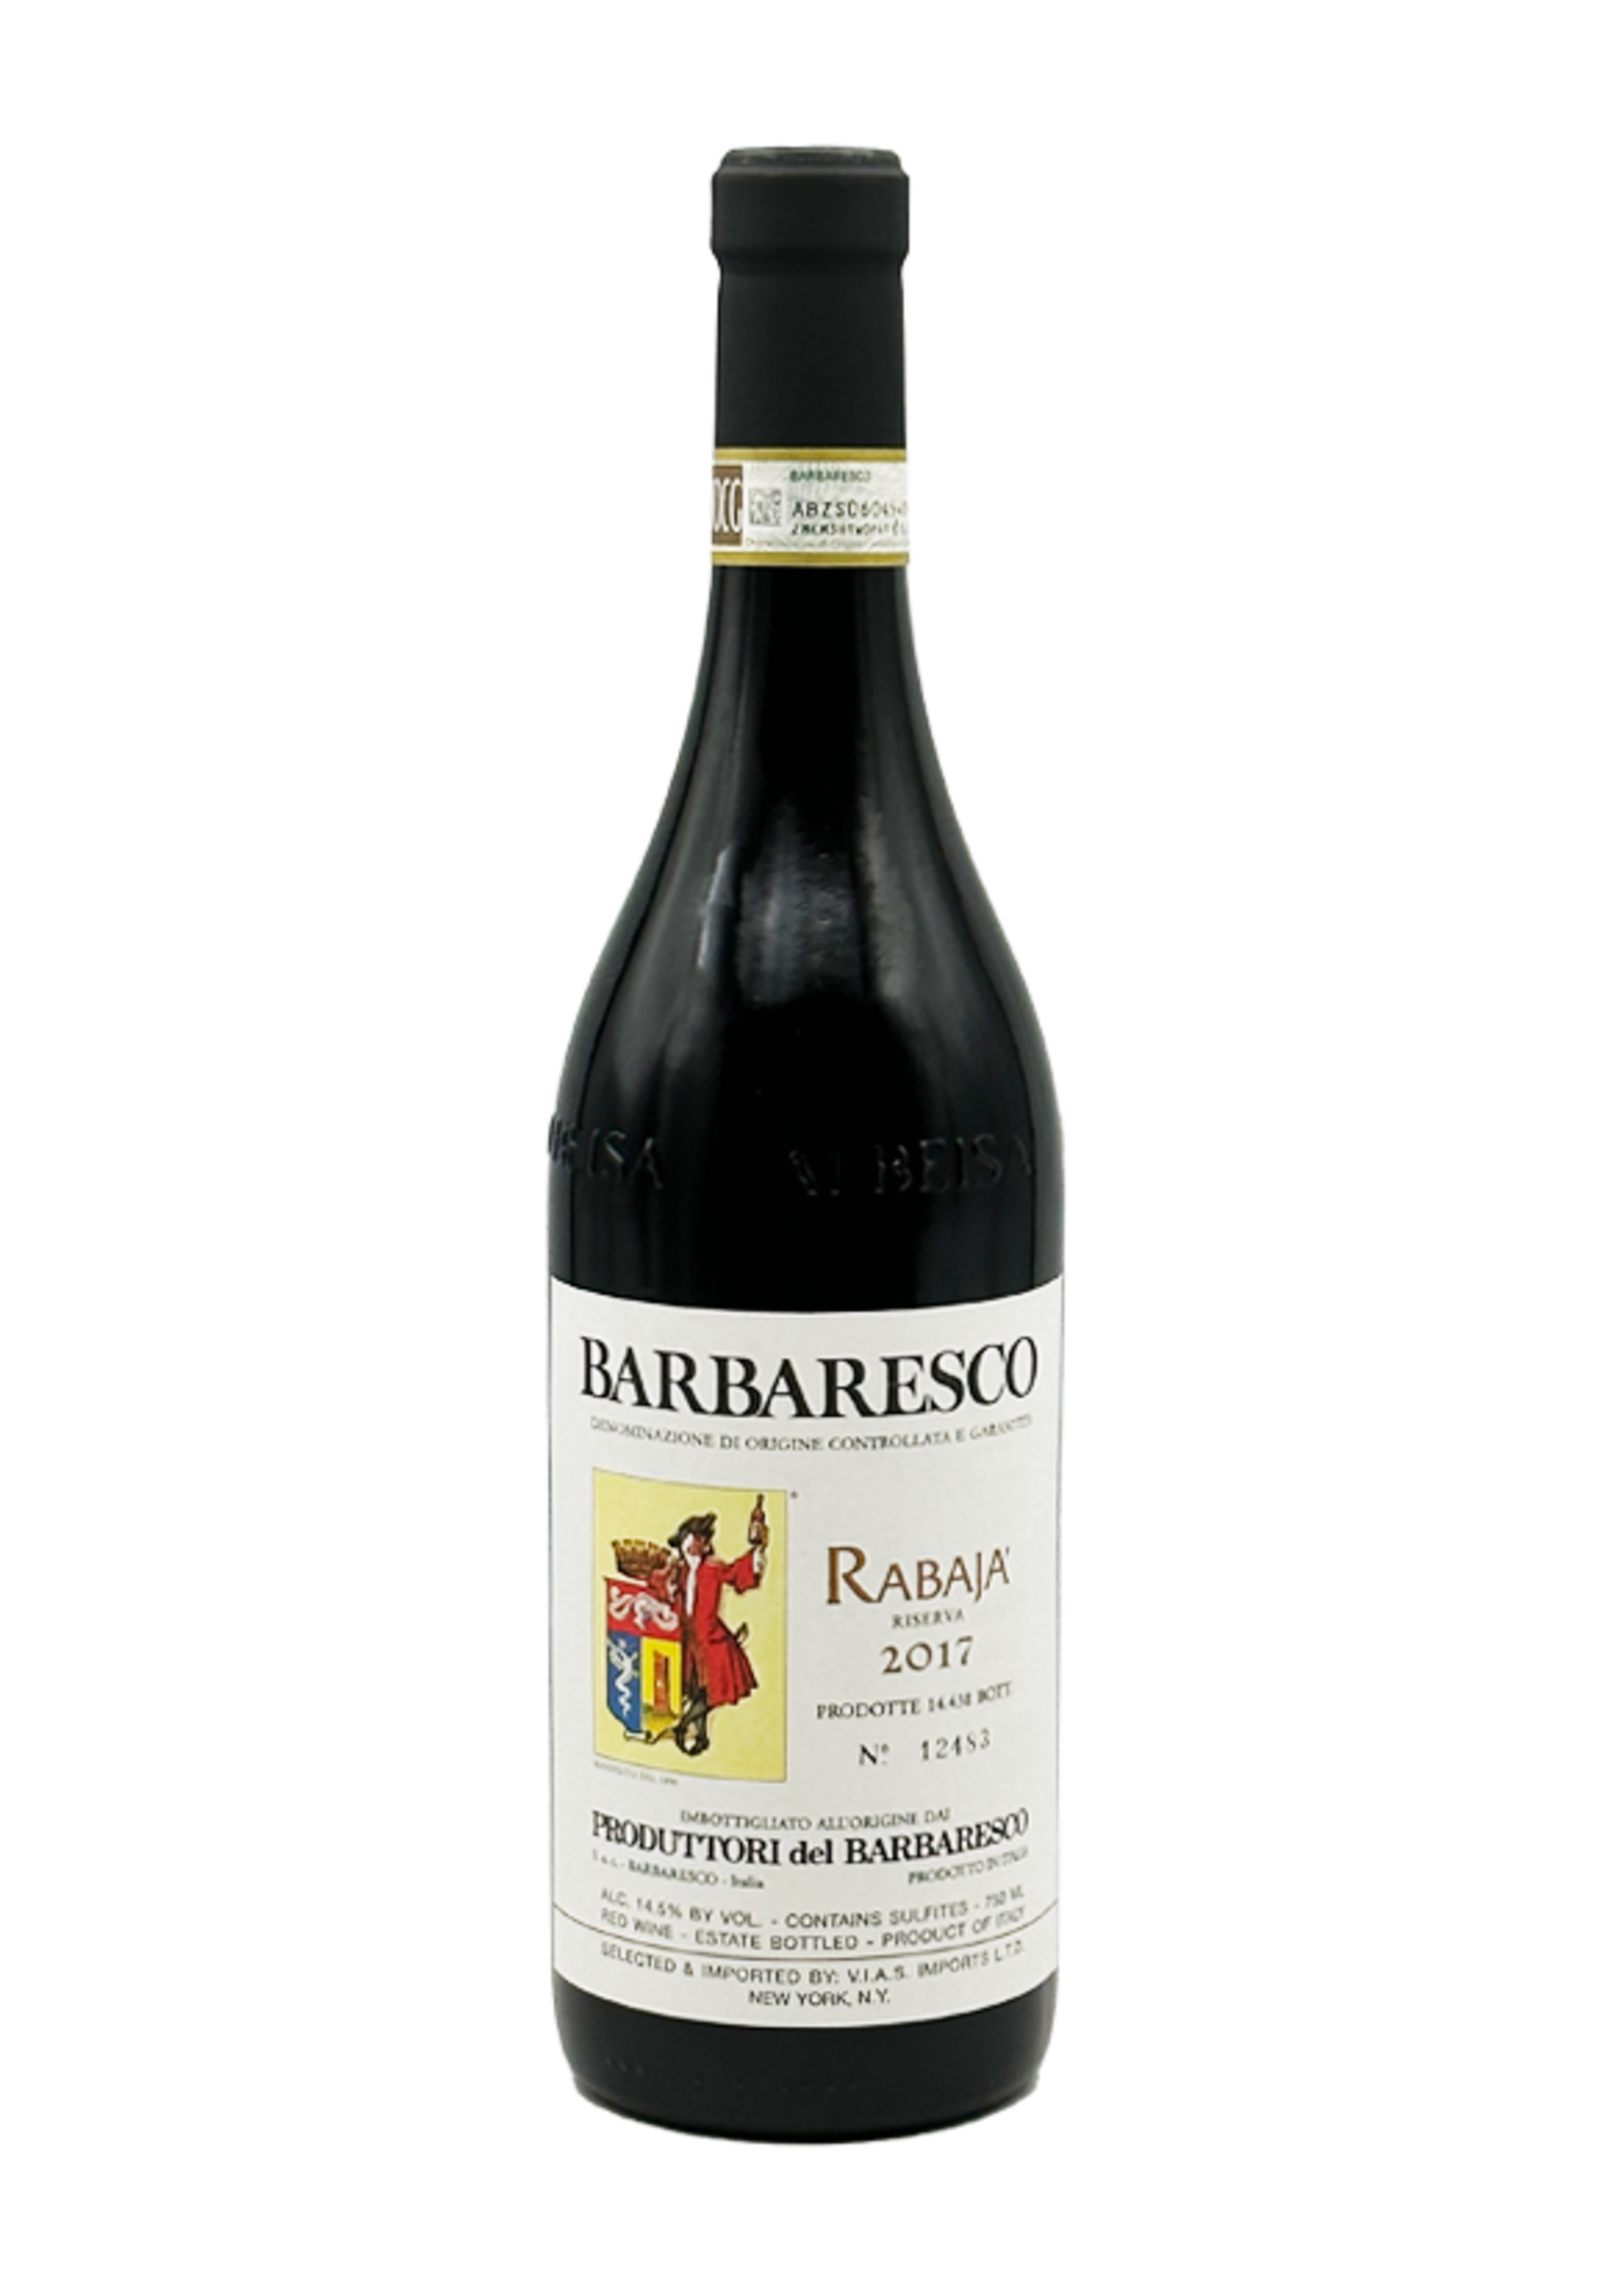 Barbaresco "Rabaja" 2017 Produttori del Barbaresco